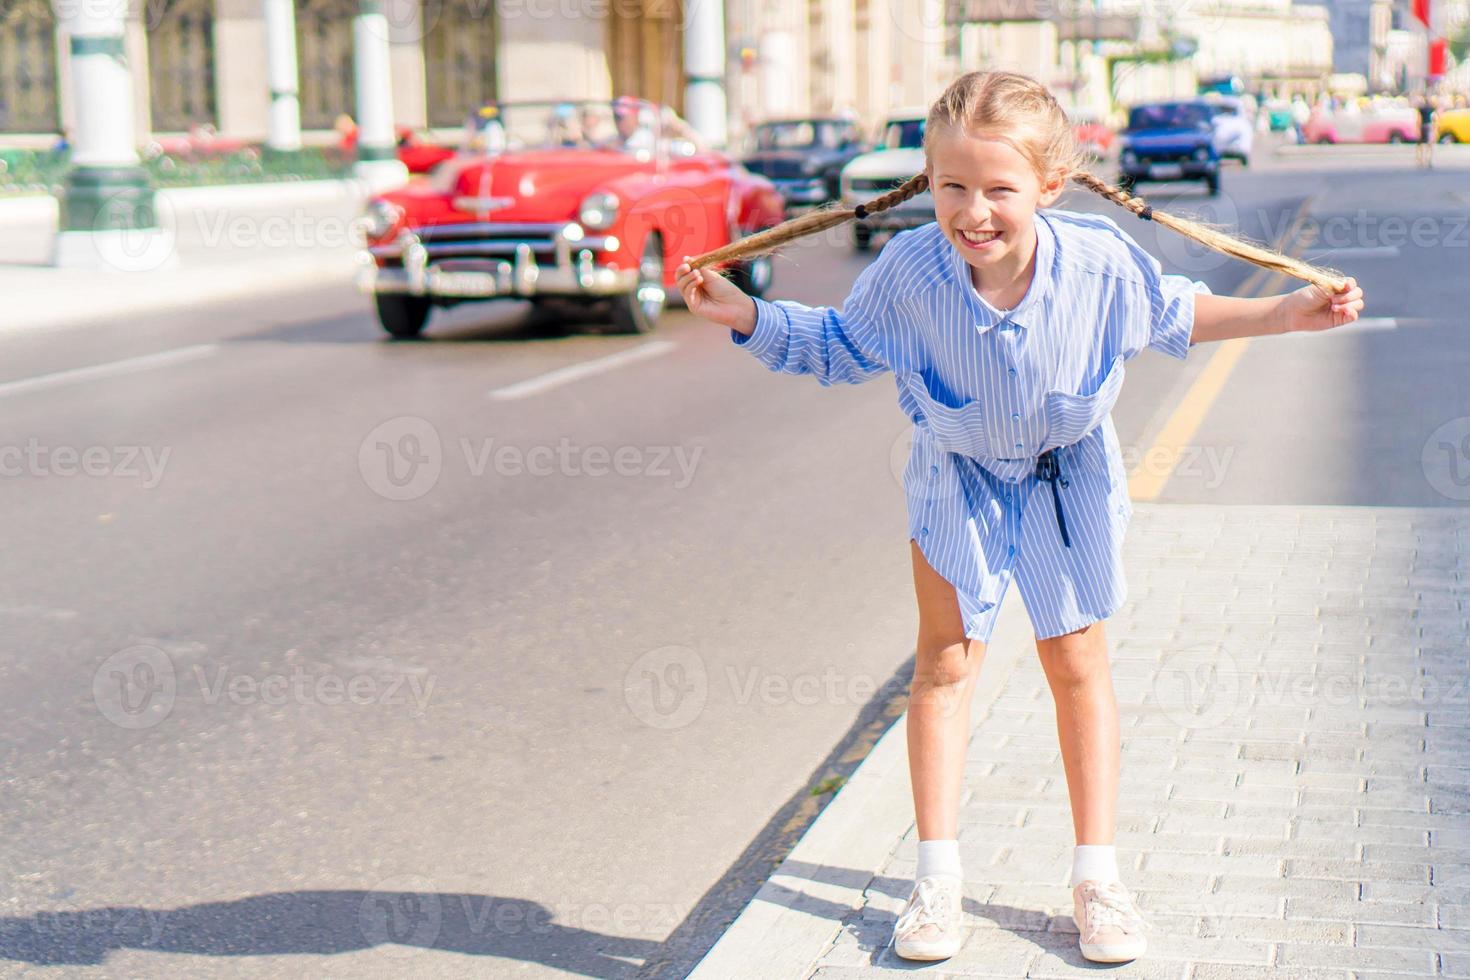 Adorable little girl in popular area in Old Havana, Cuba. Portrait of kid background vintage classic american car photo